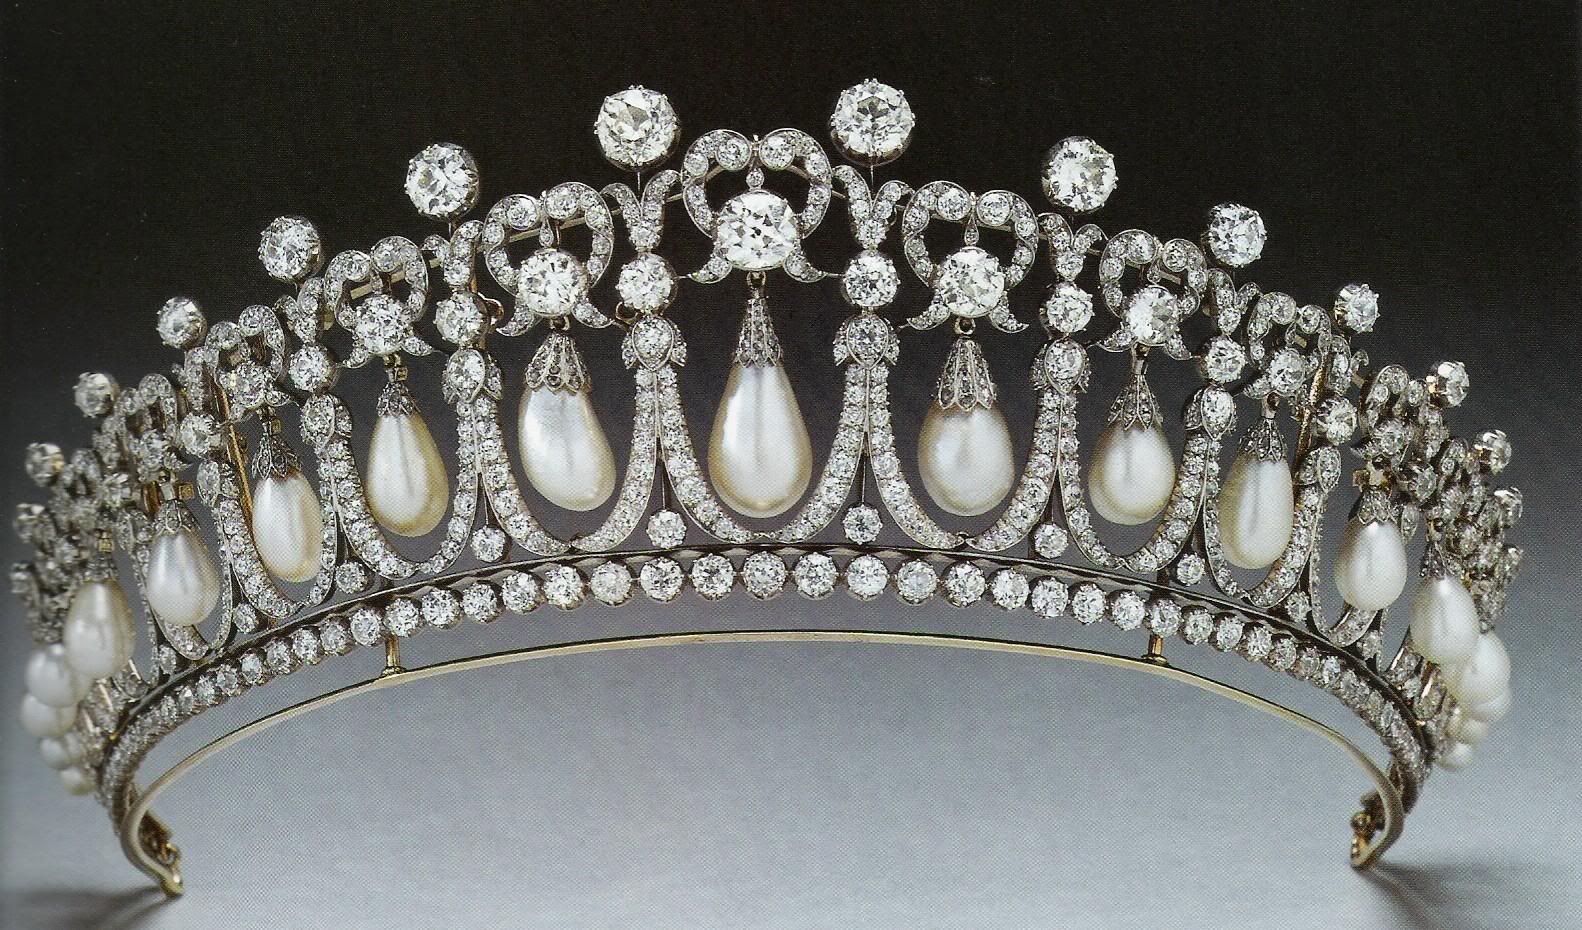 http://2.bp.blogspot.com/-QM9z_TrEa4c/UDPDMHF-inI/AAAAAAAADhY/a1CmA6SGOp8/s1600/cambridge+lovers+knot+tiara+pearl+diamond+princess+diana.jpg